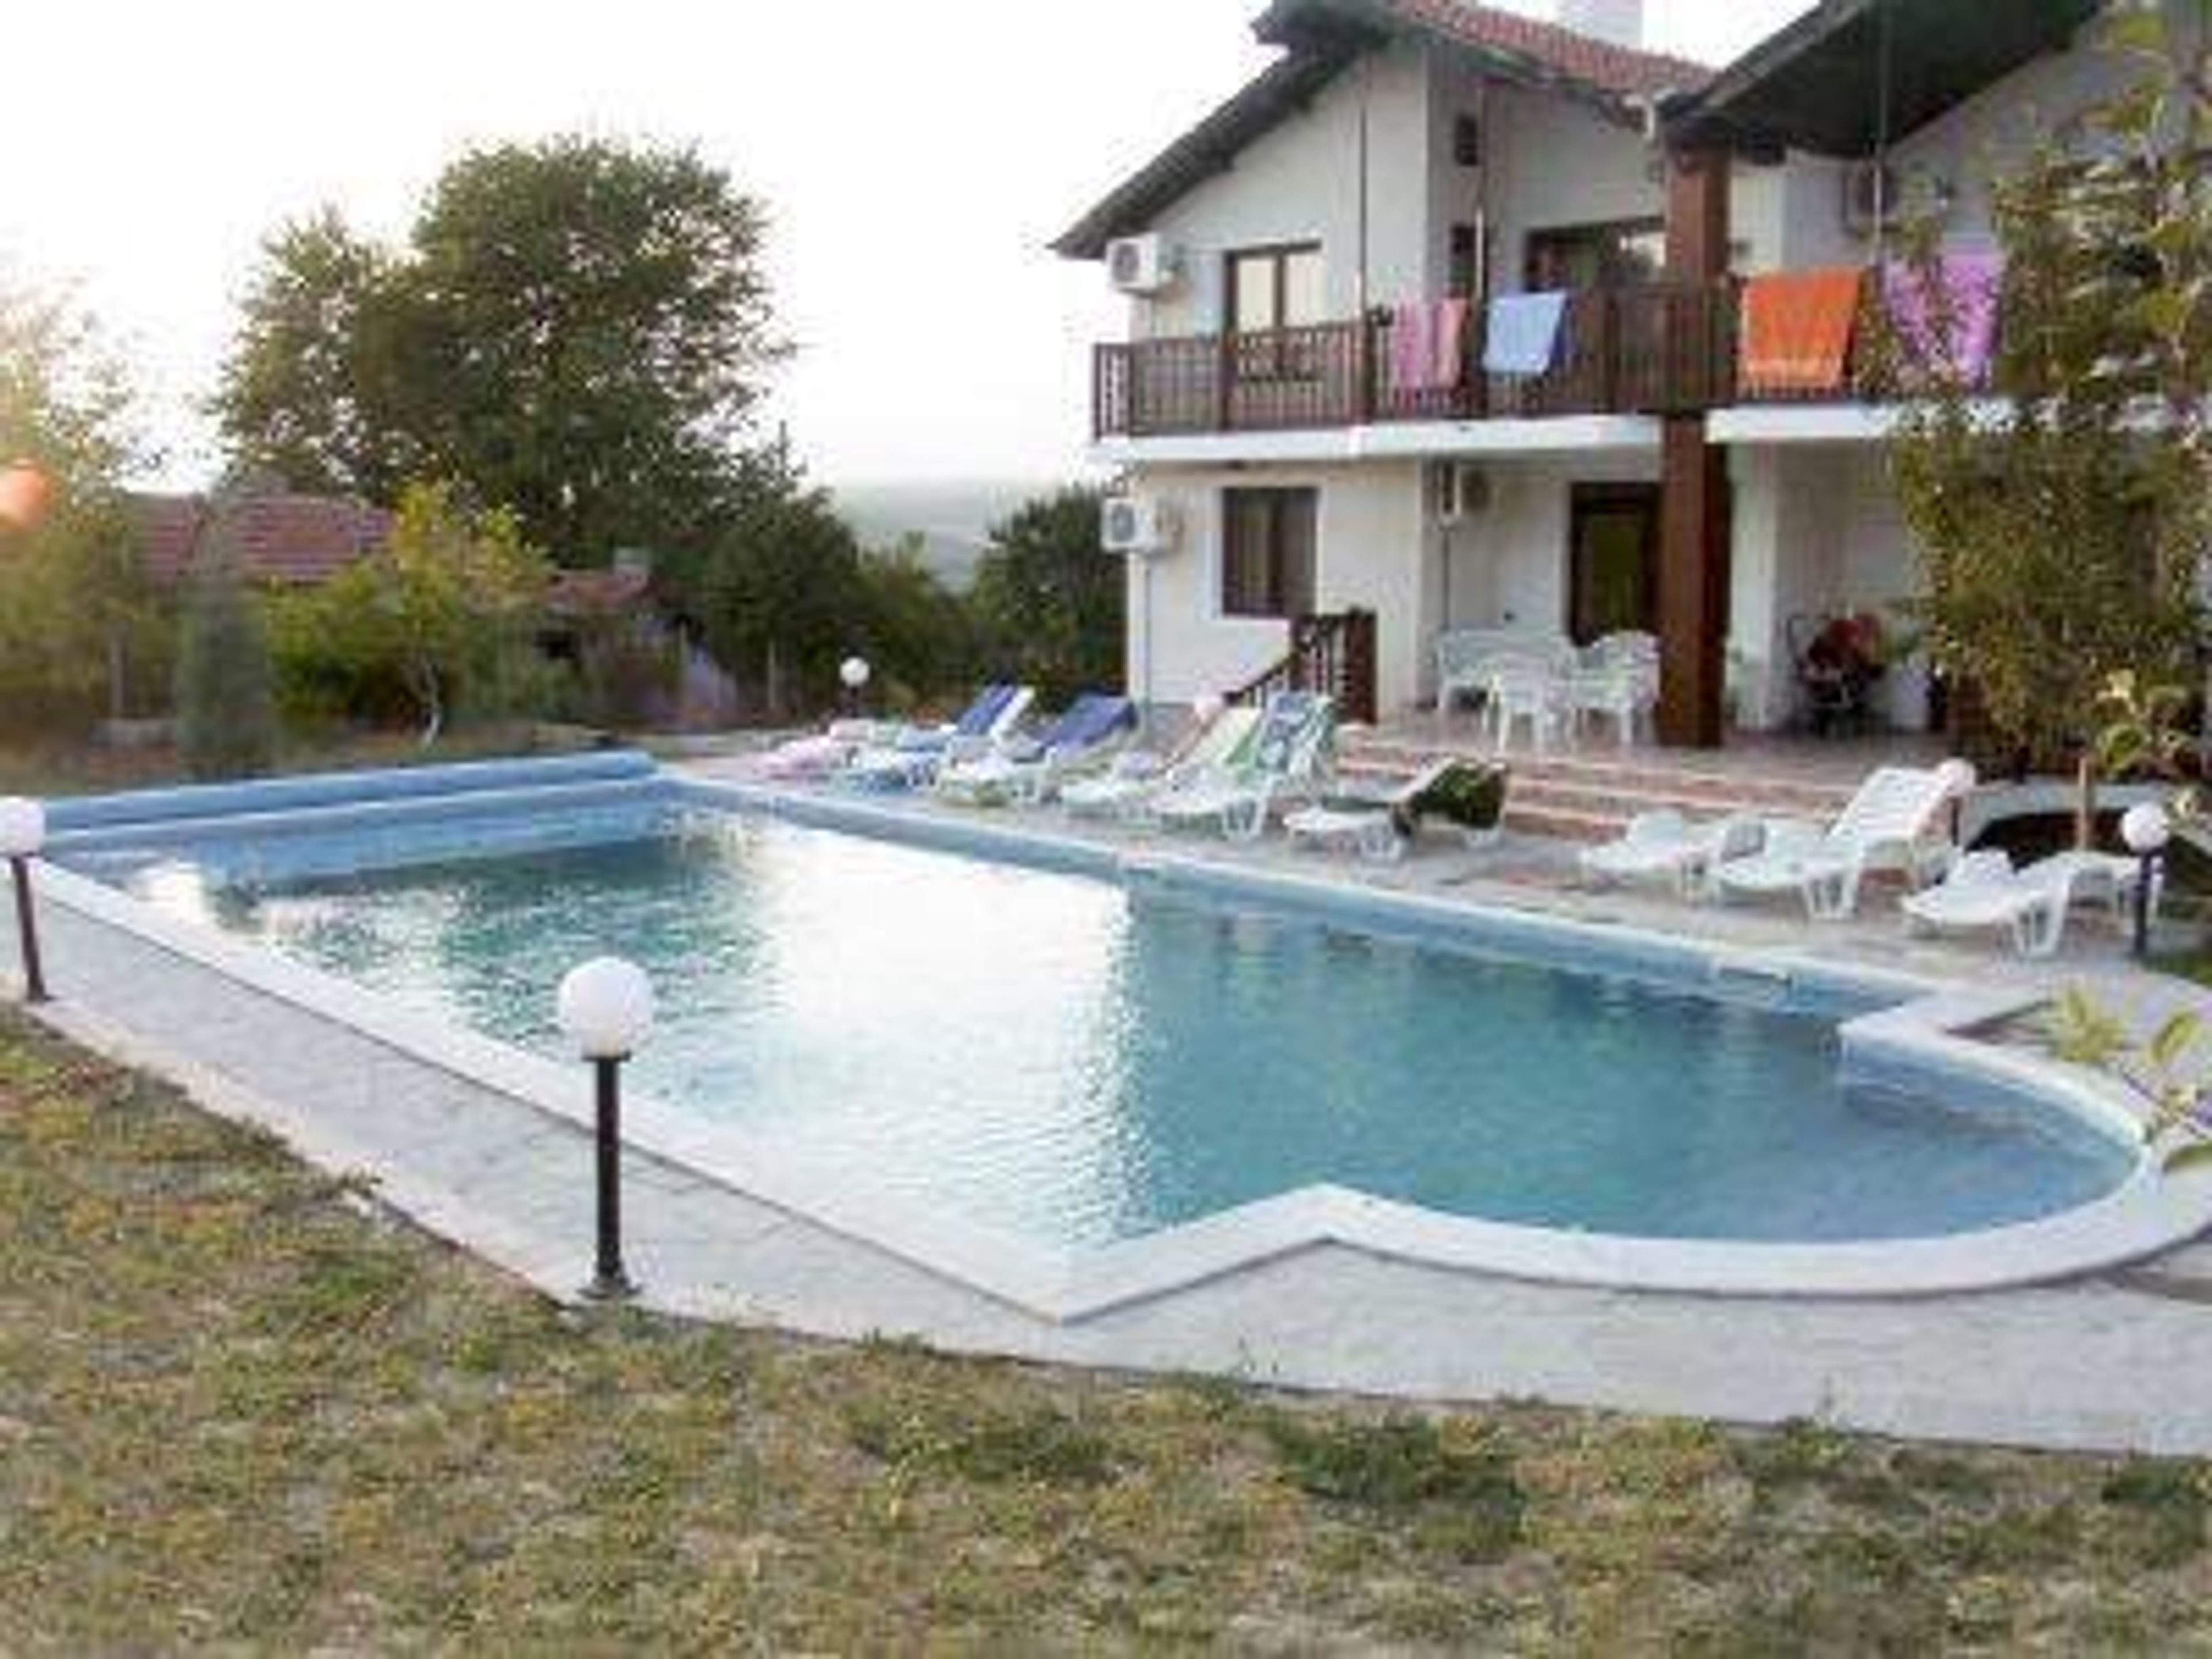 Villa & pool